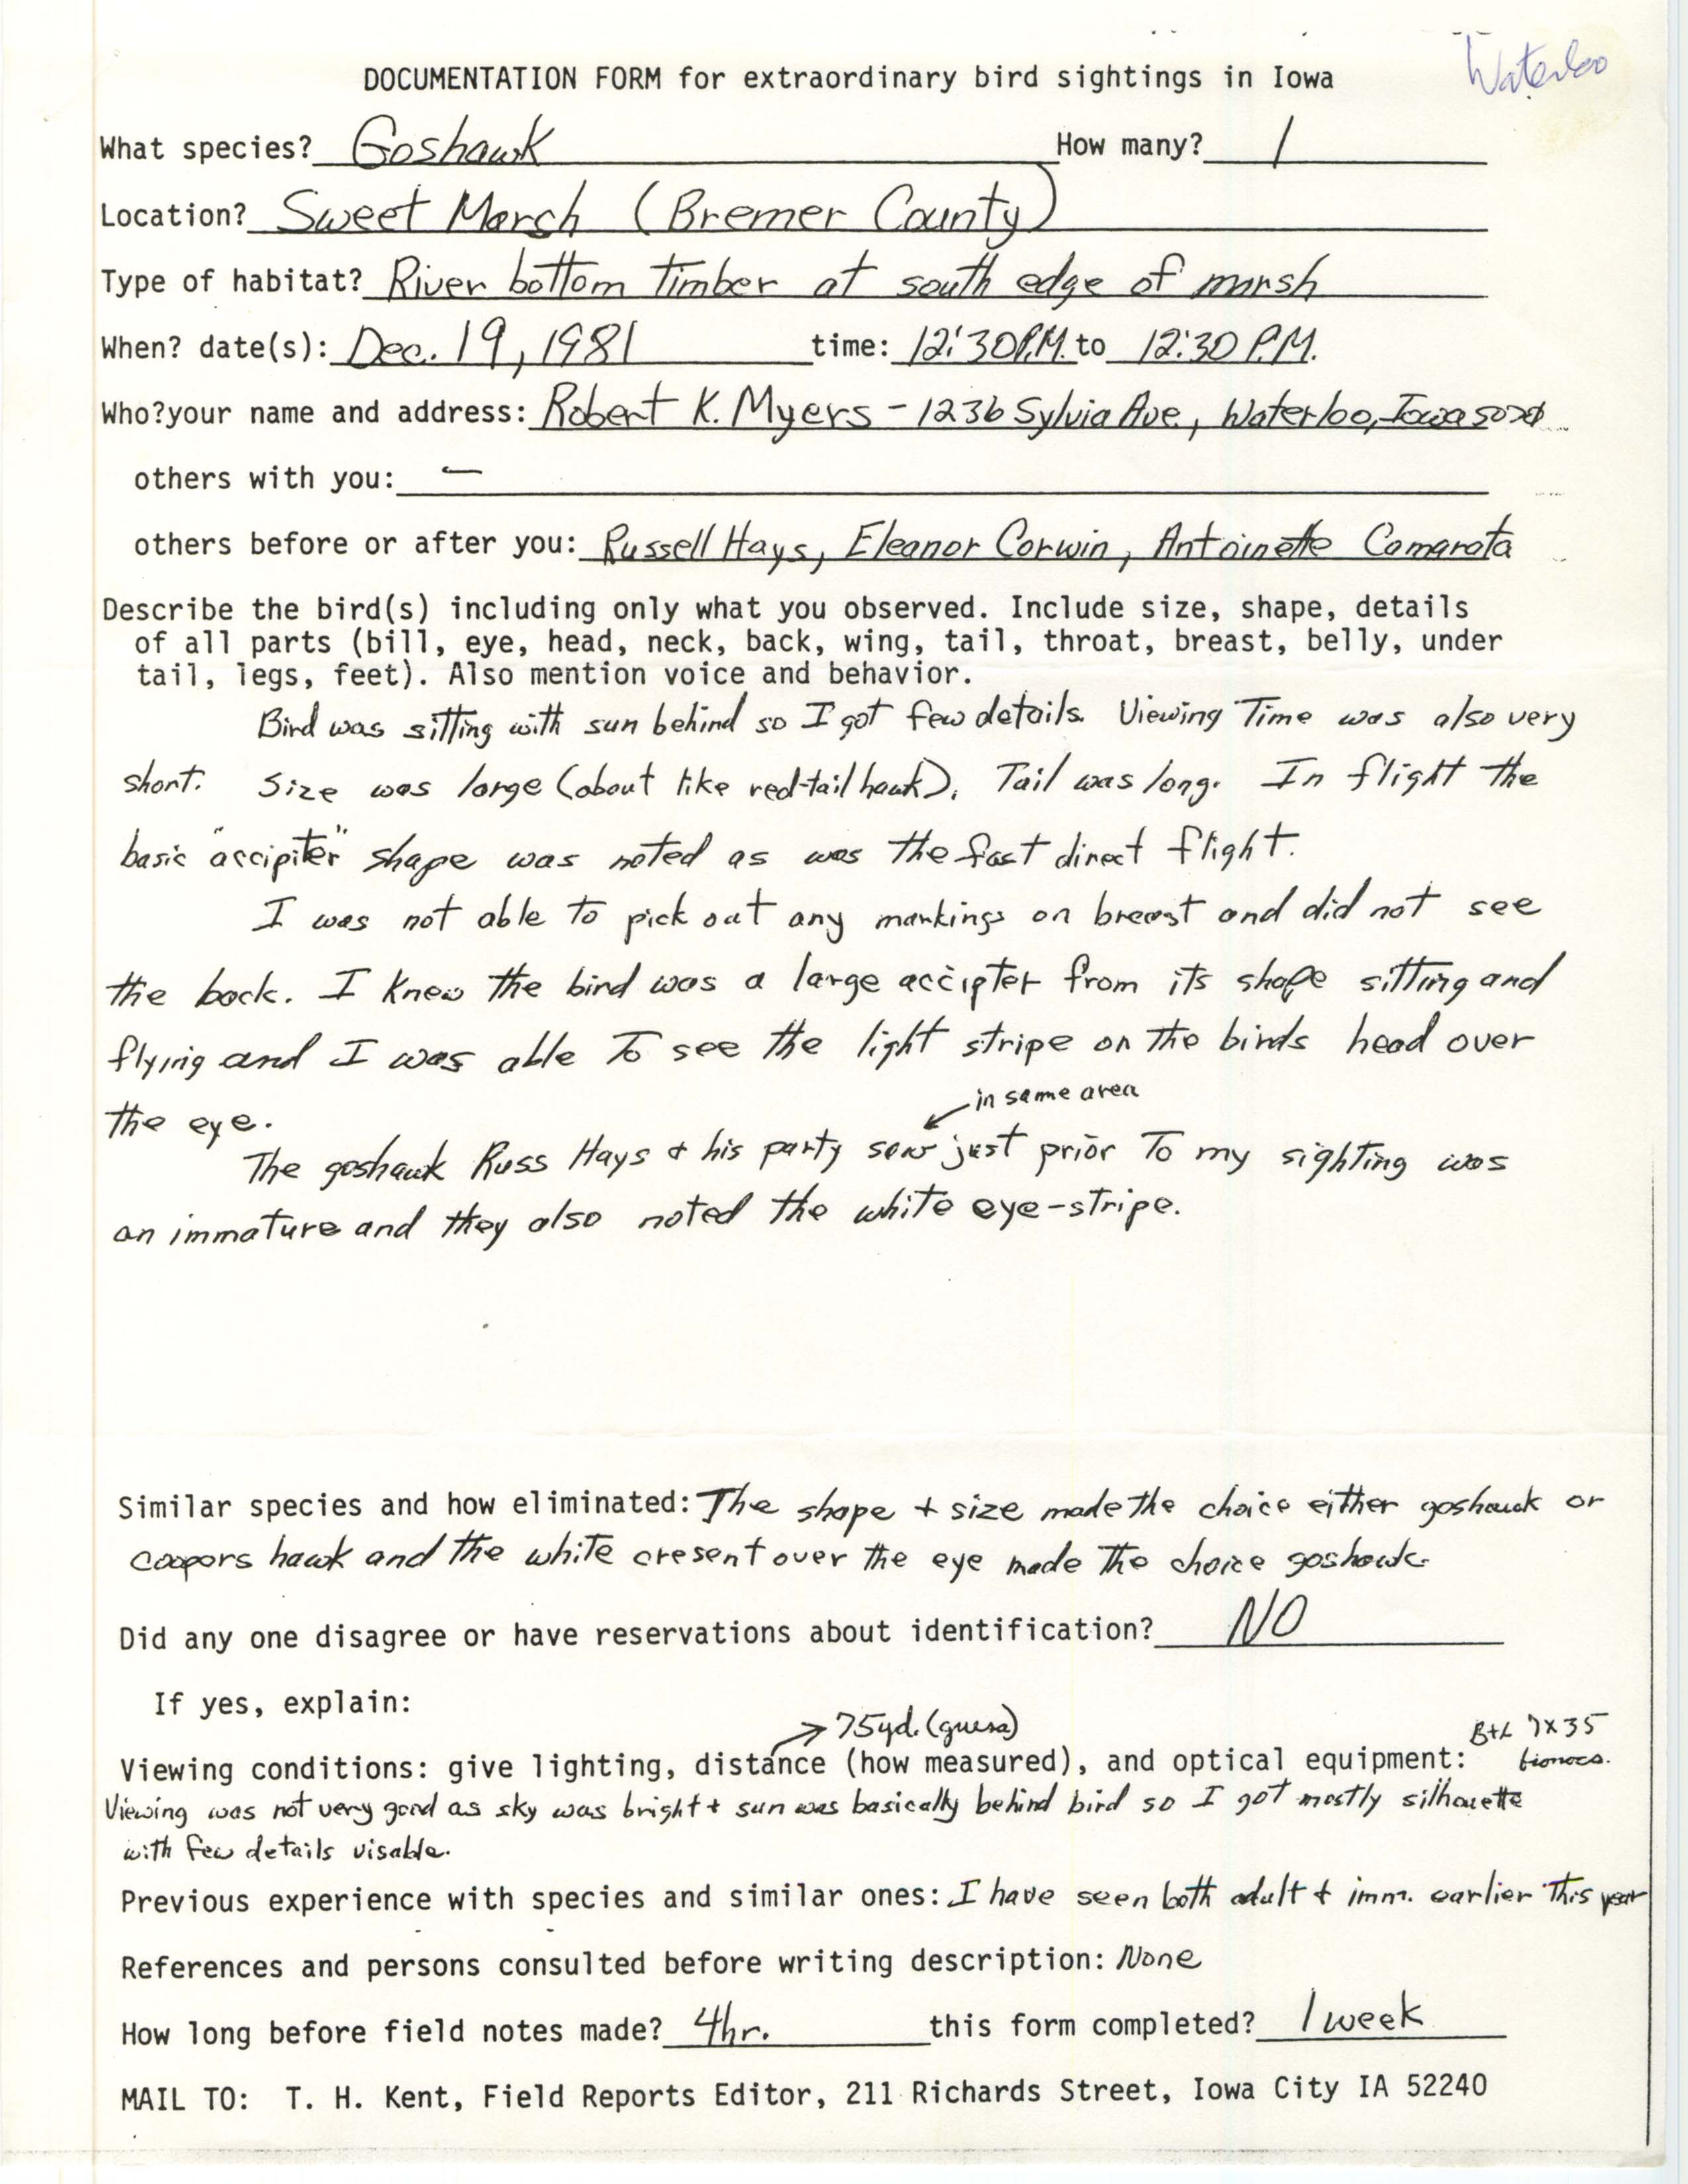 Rare bird documentation form for Northern Goshawk at Sweet Marsh, 1981